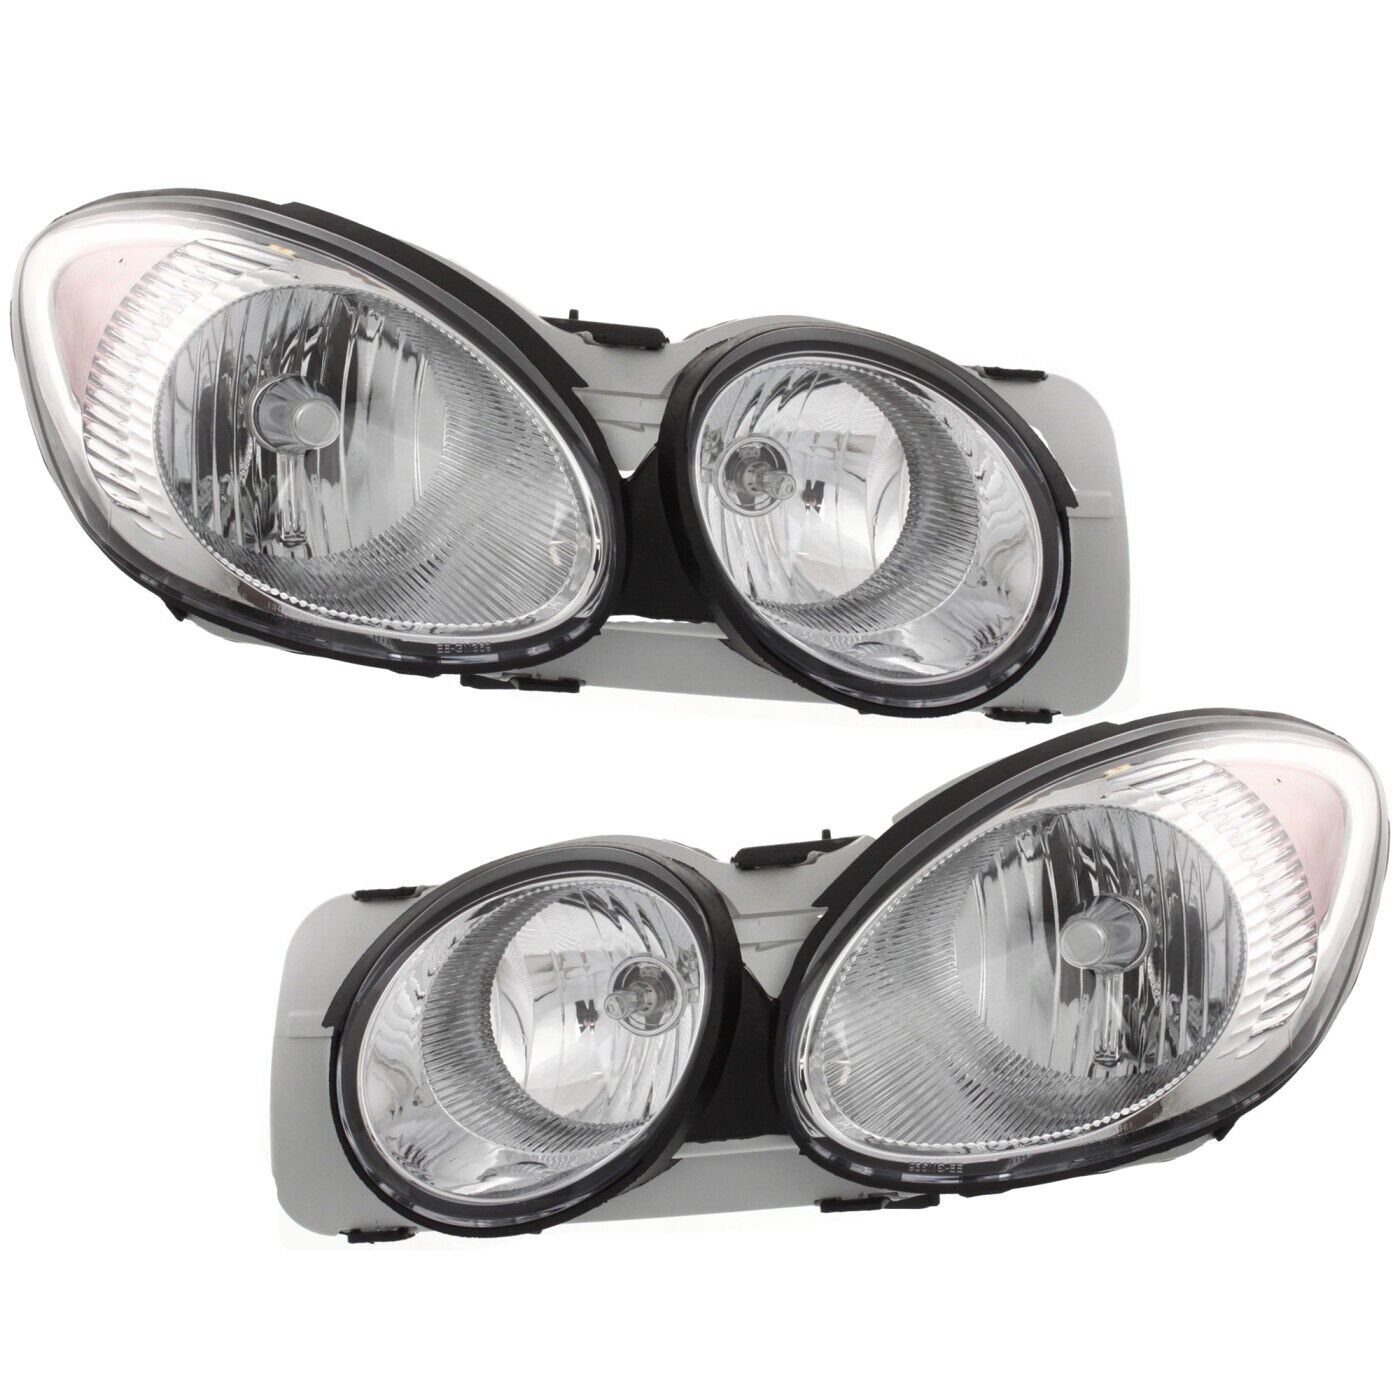 Headlamp Headlight Lamp Light LH and RH Pair Set For 05-07 Buick LaCrosse/Allure